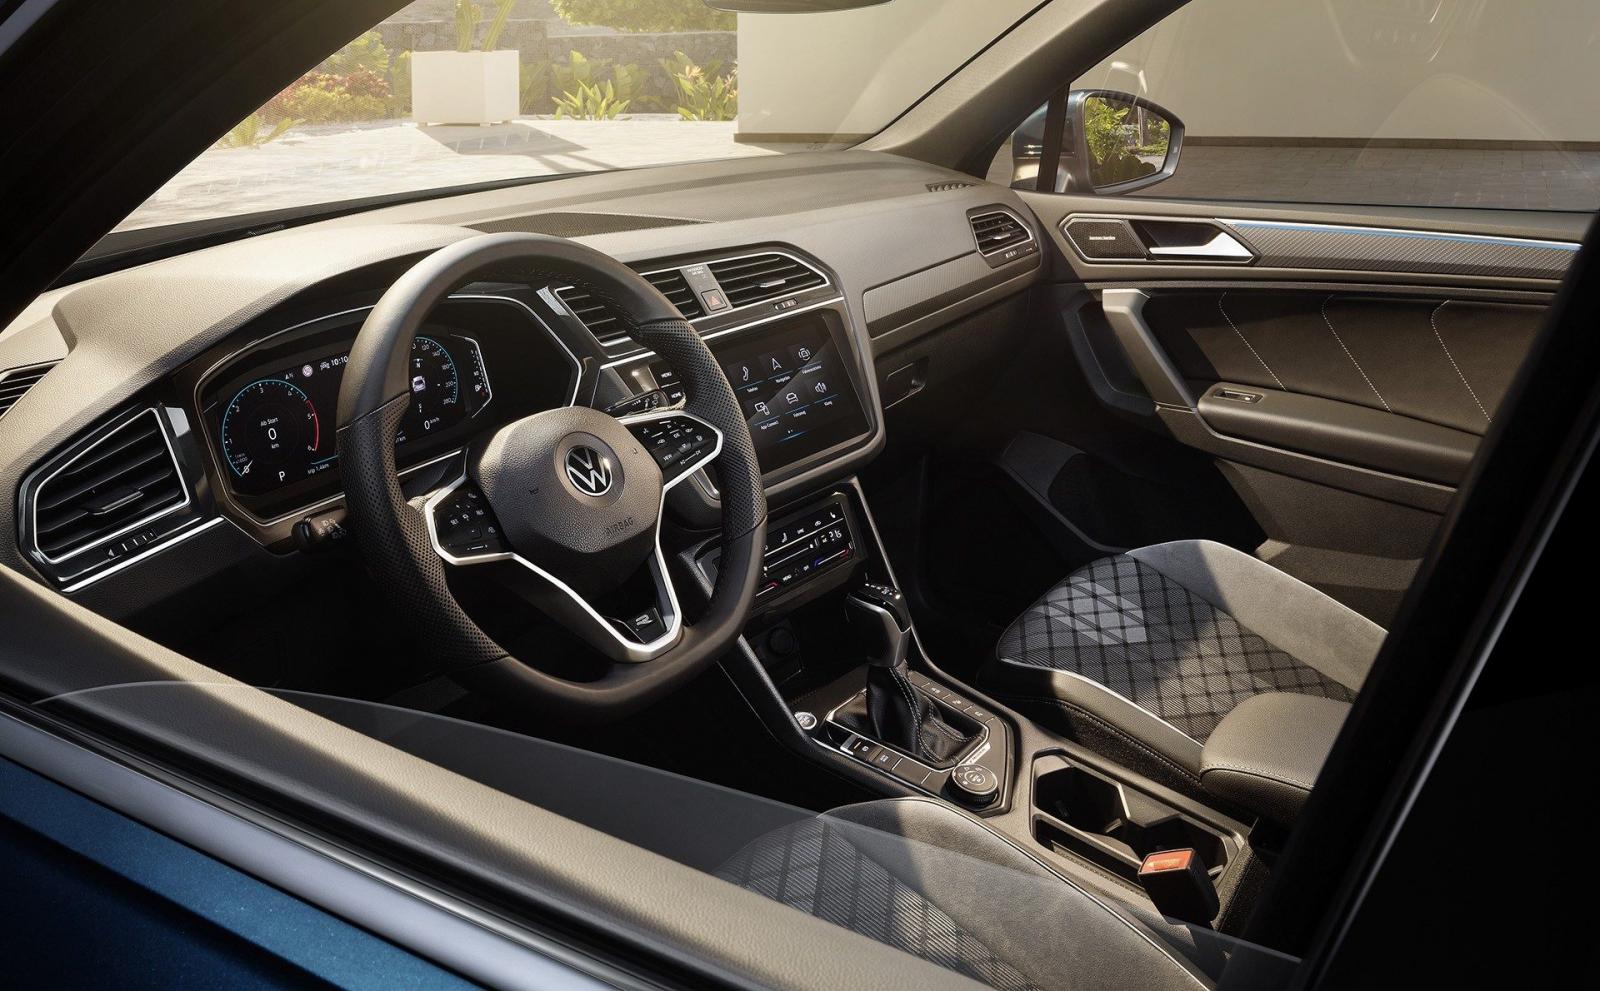 Khoang nội thất Volkswagen Tiguan 2021 facelift nâng cấp mới ...